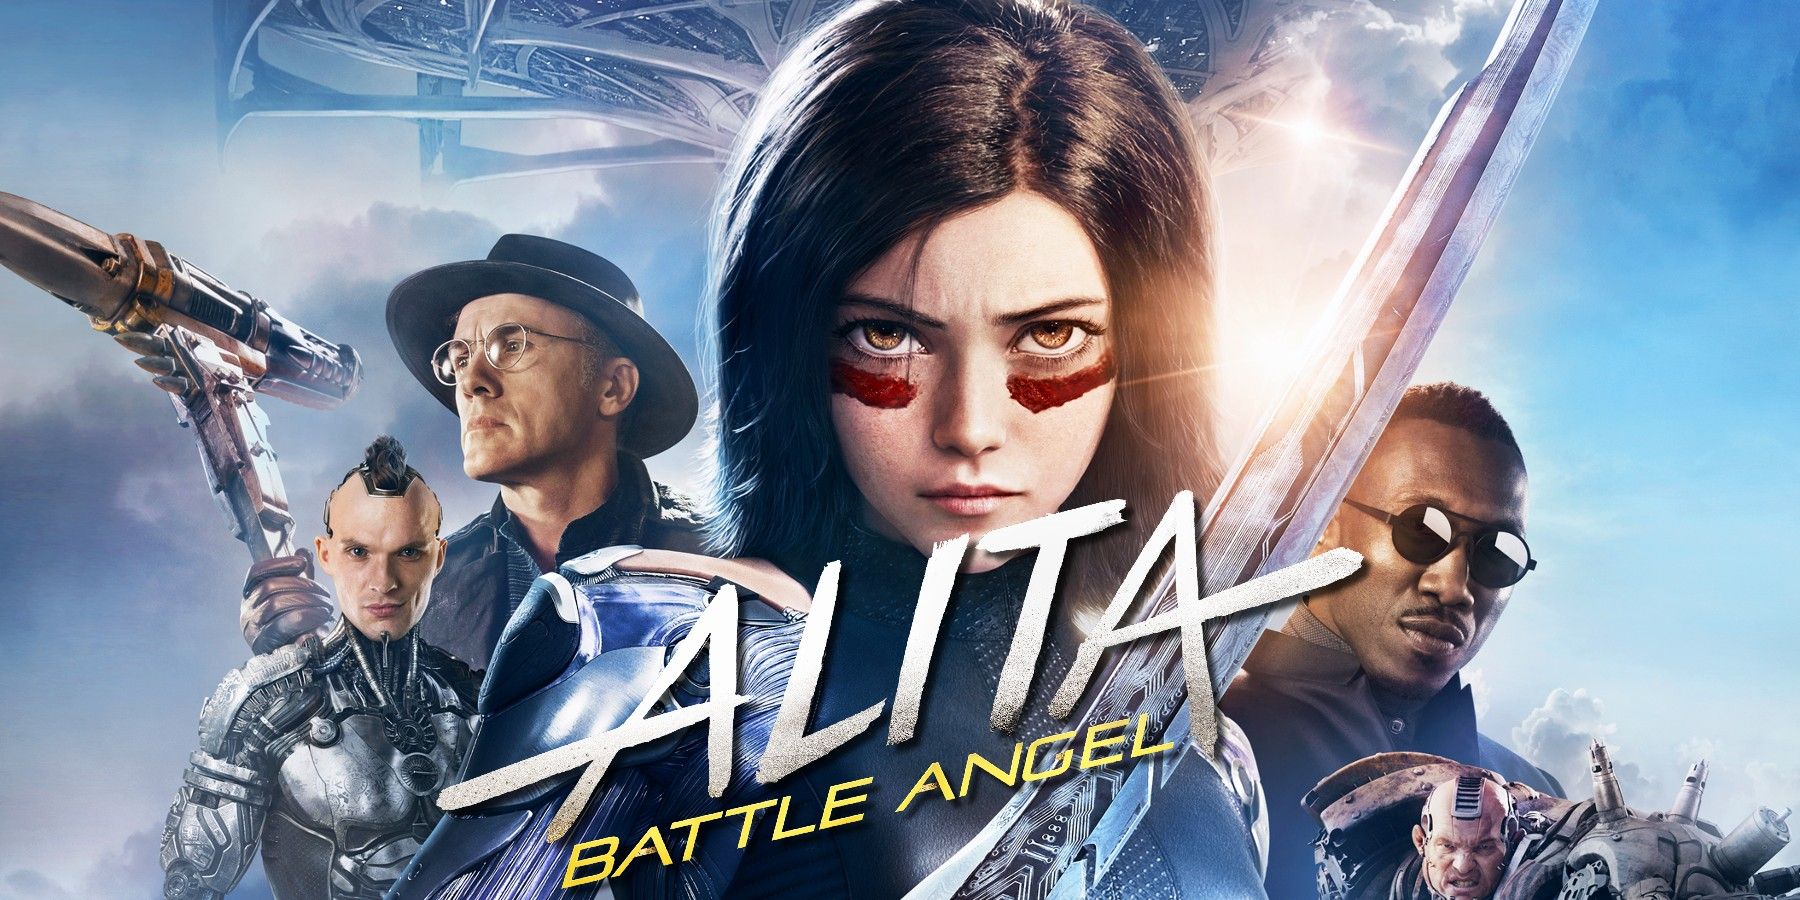 Alita: Battle Angel Sequel Gets Update From Avatar 2 Producer